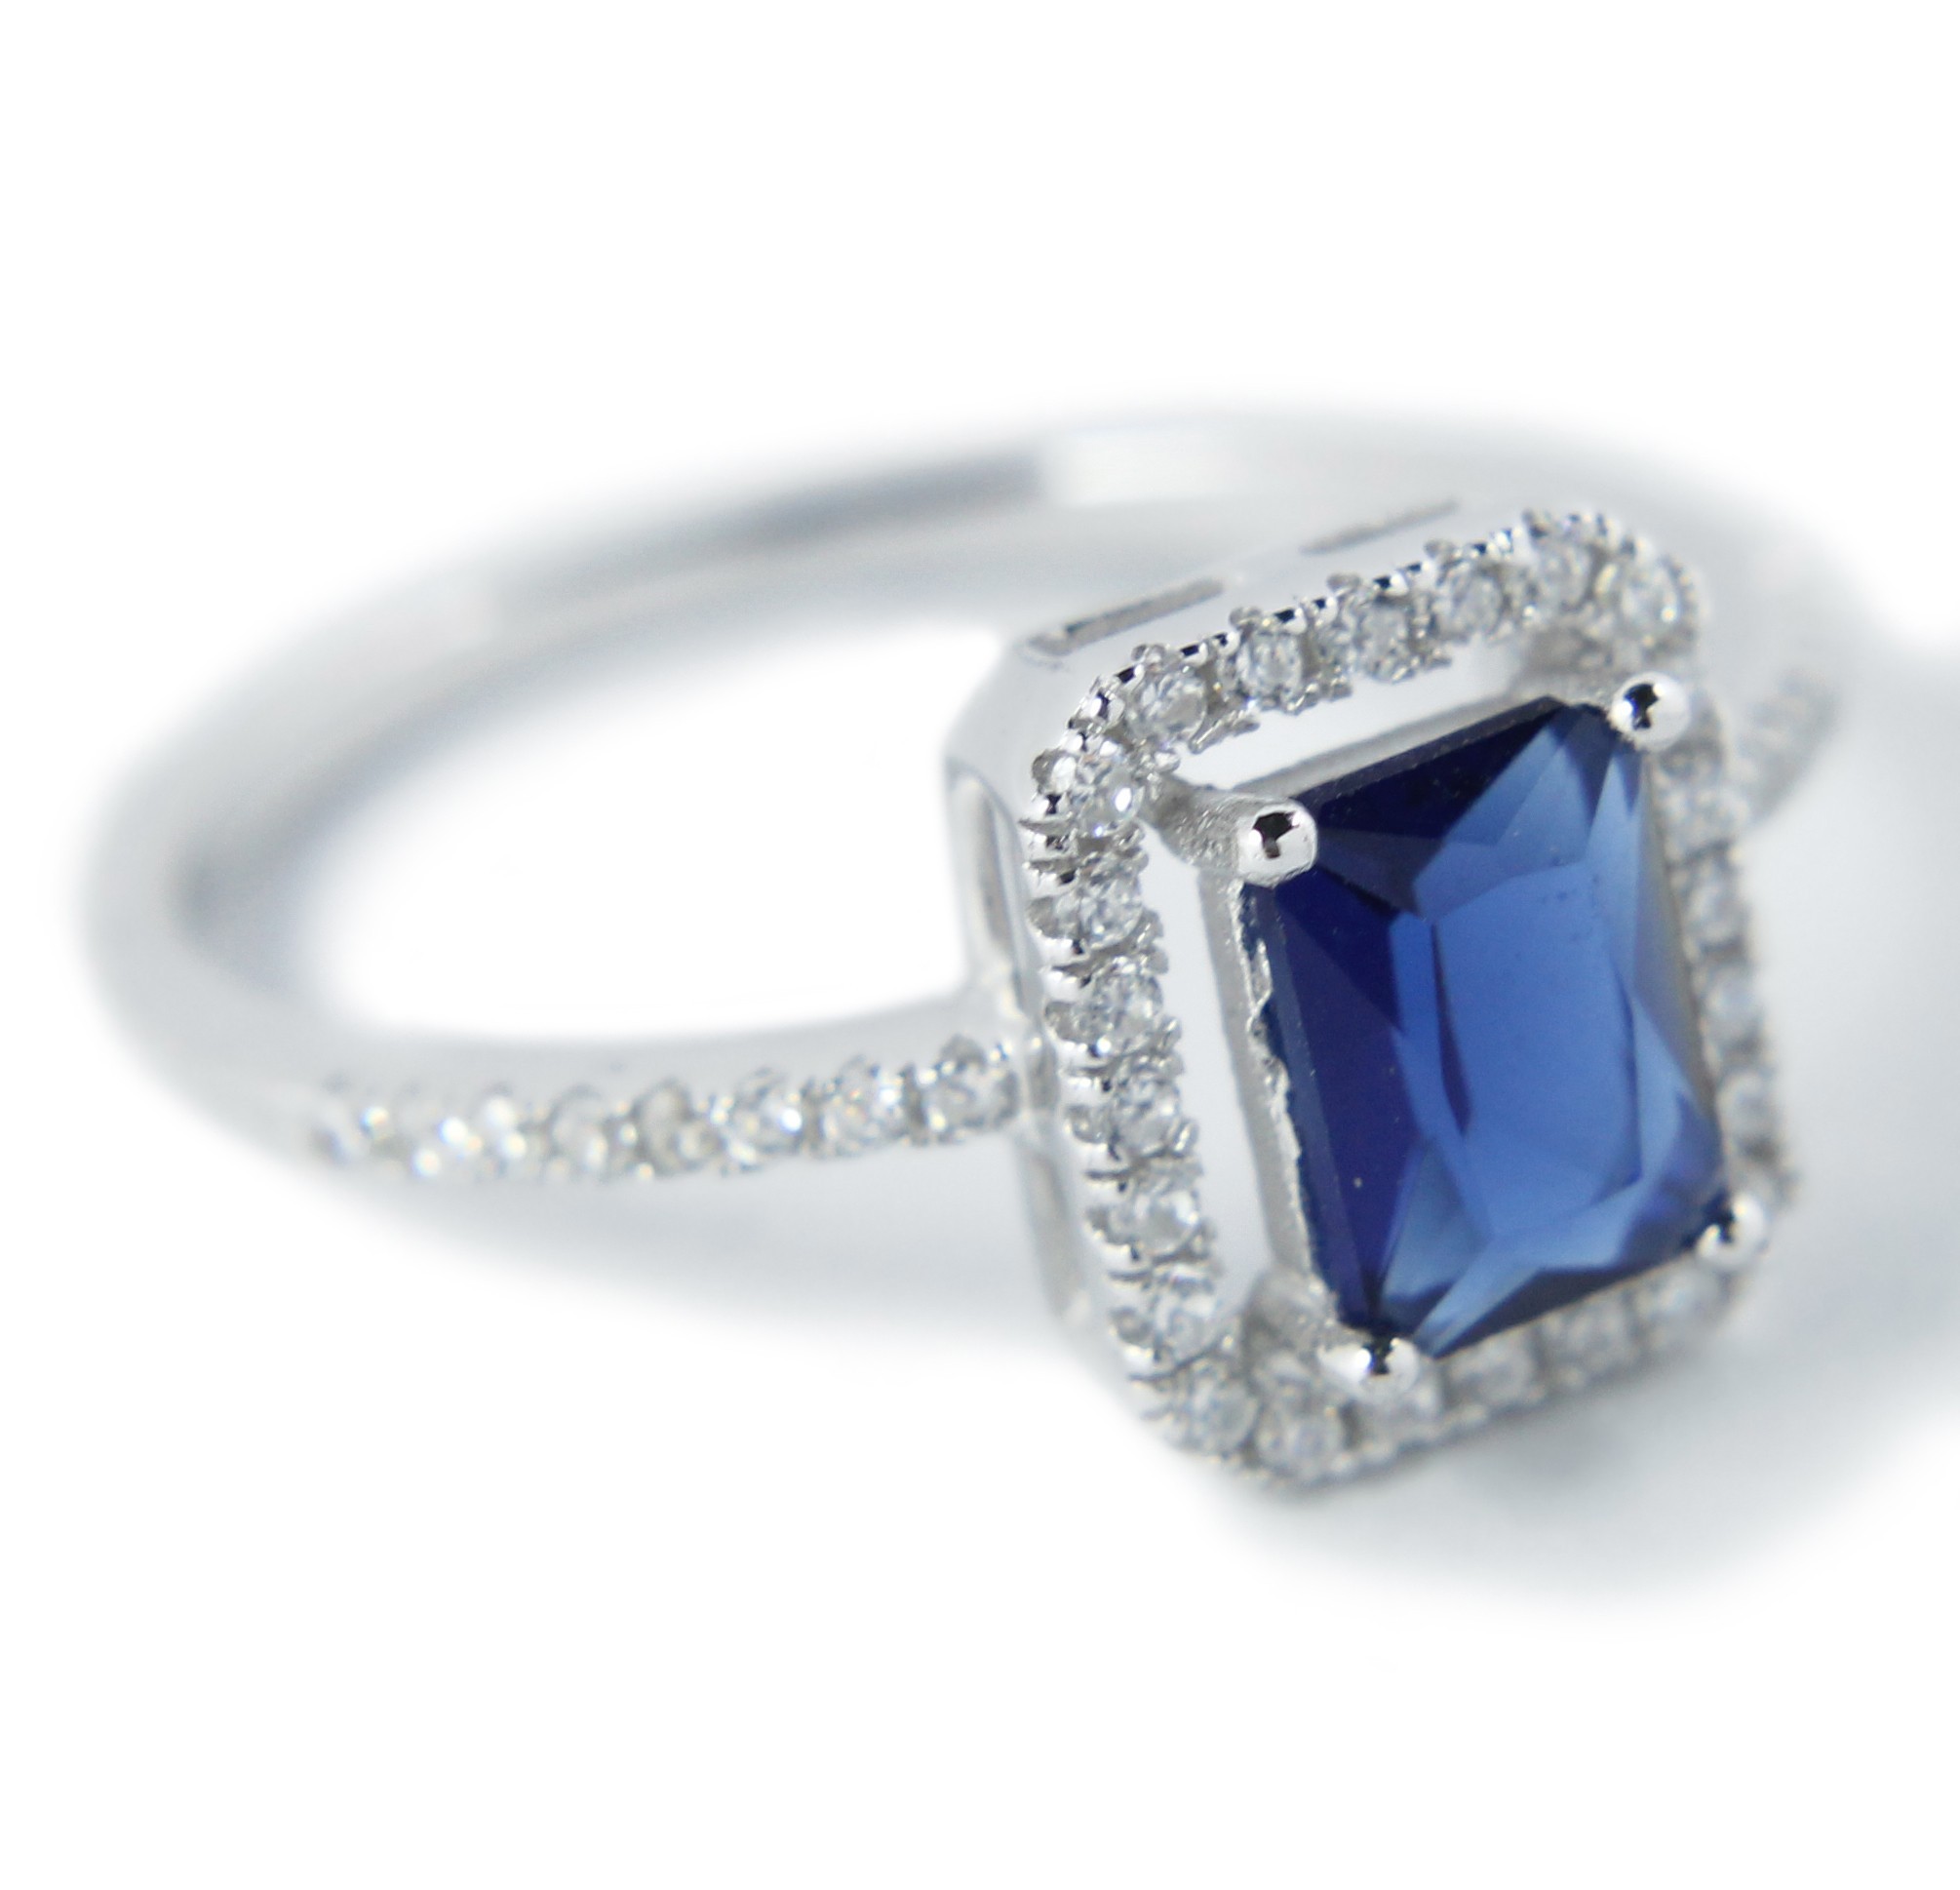 Beautiful Carat Blue Cubic Zirconium Antique Engagement Ring In Silver Jeenjewels